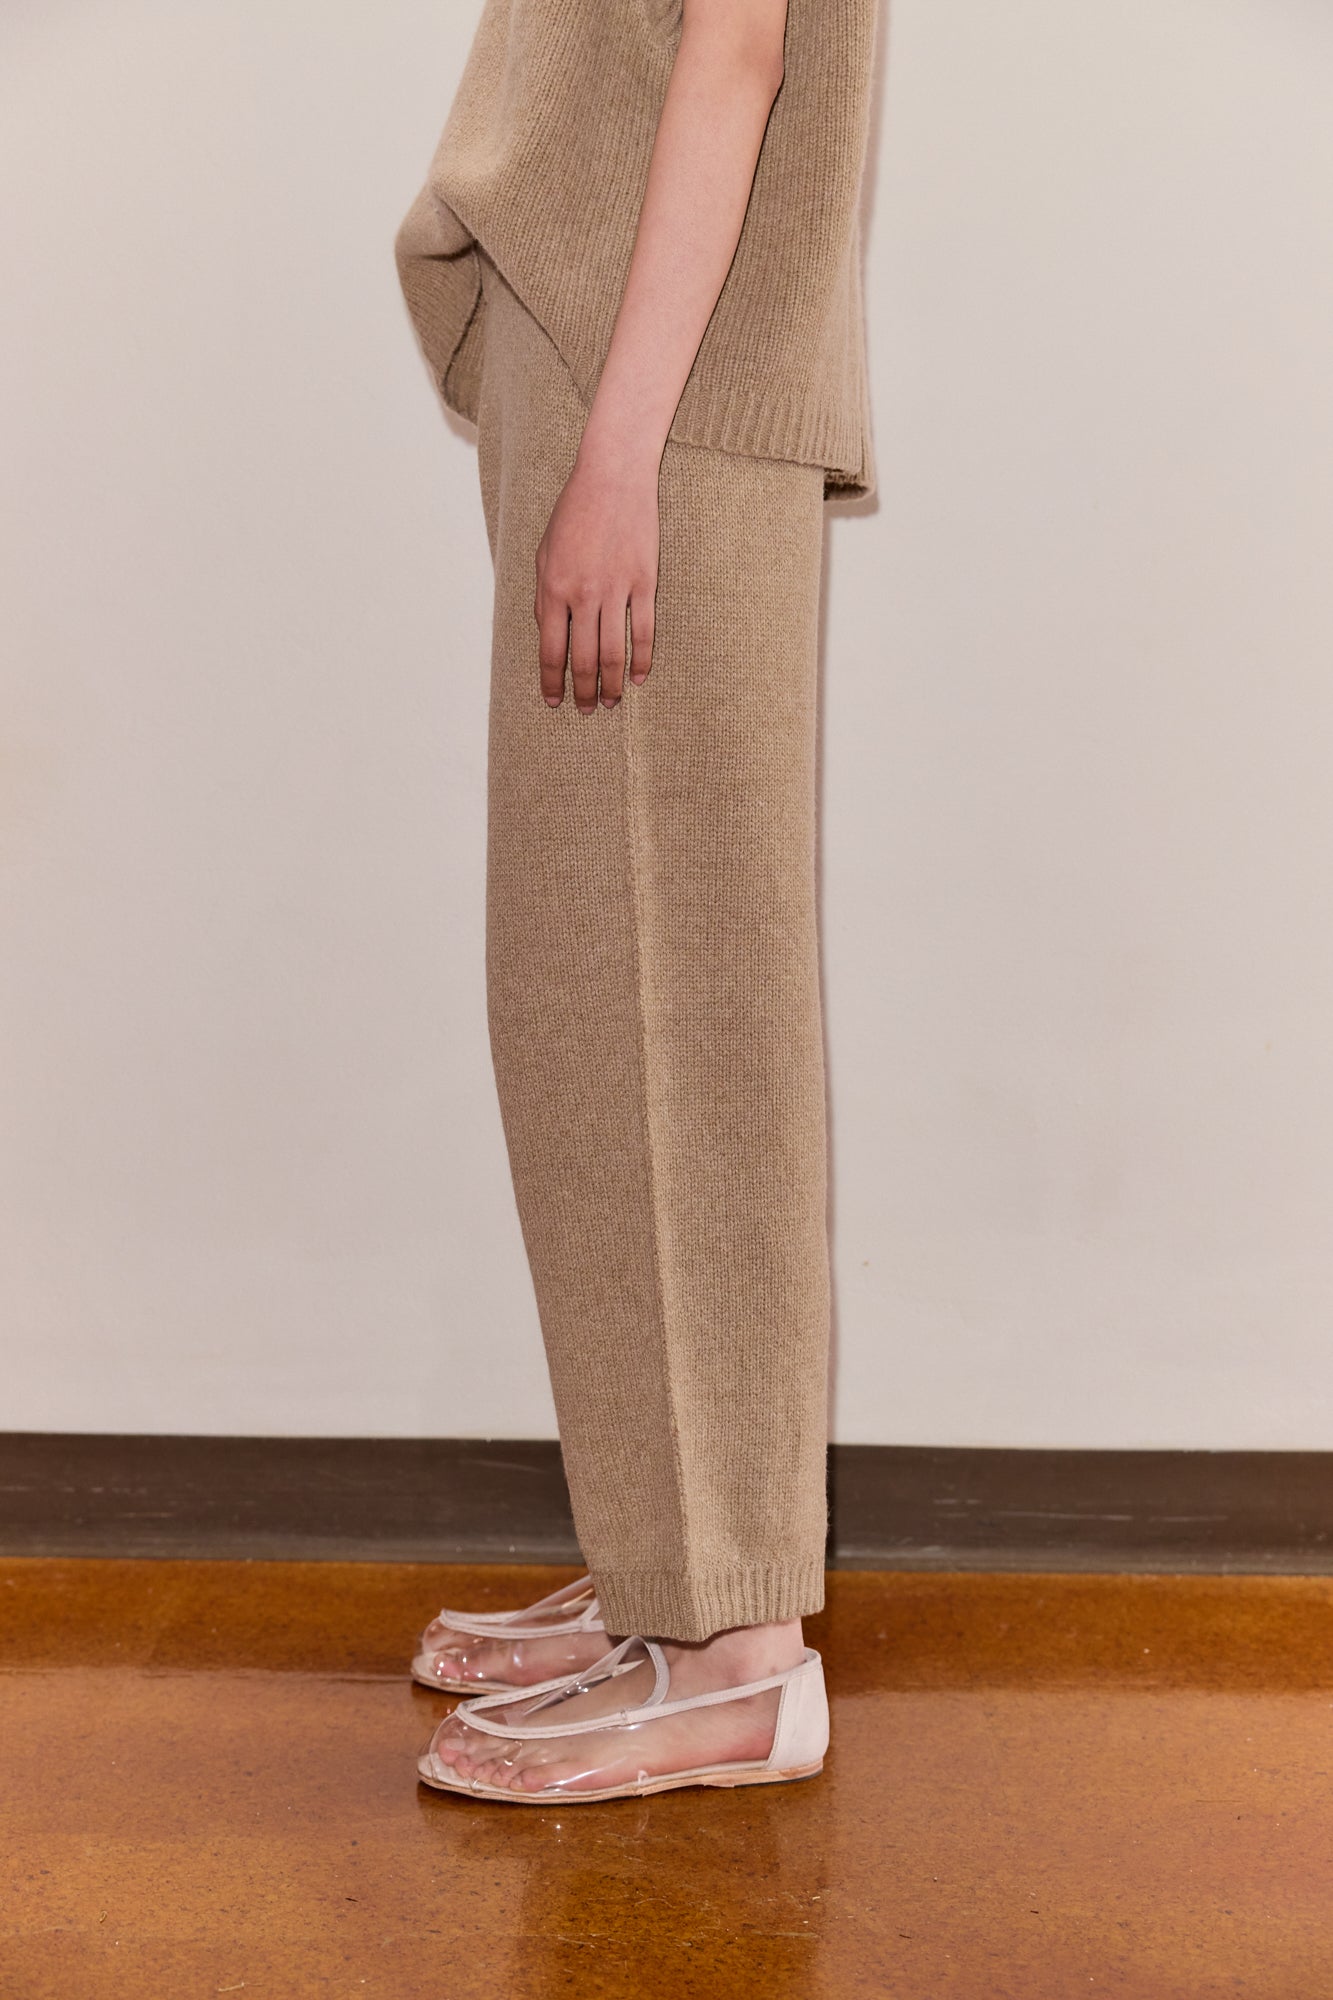 Female model wearing The Seam Knit Pant - Wheat by Deiji Studios against plain background